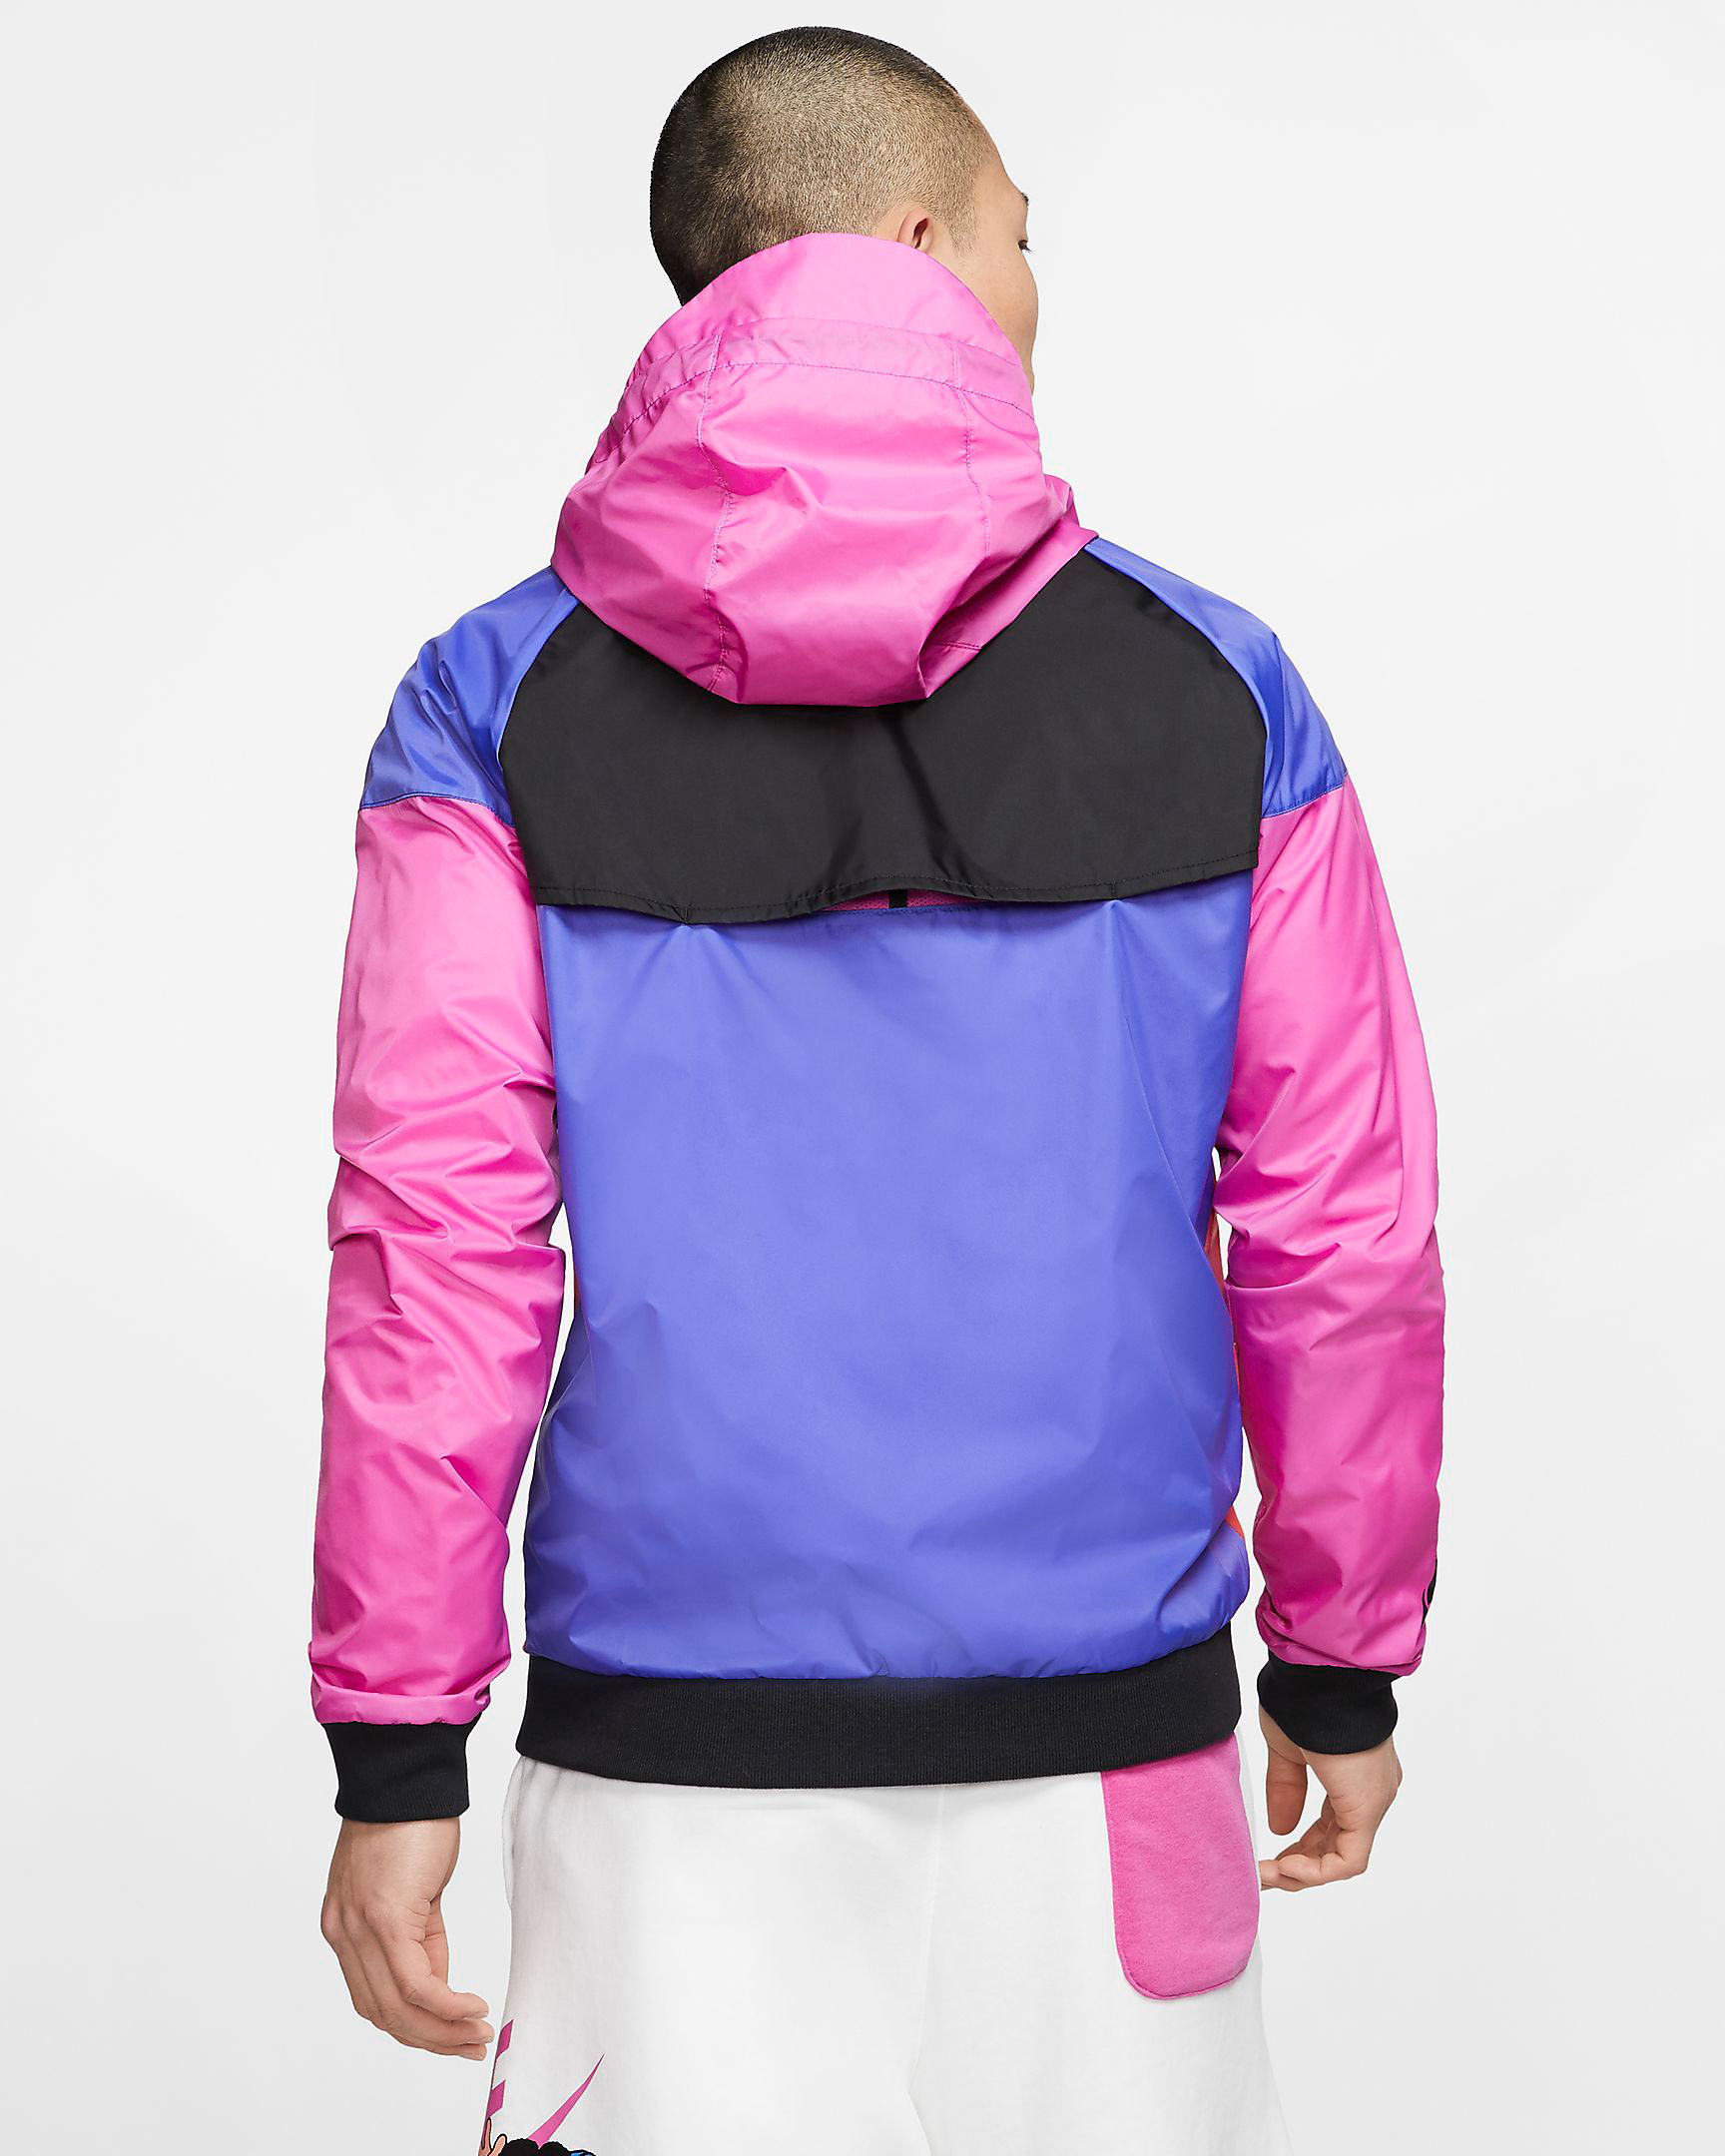 nike-hike-man-windrunner-jacket-pink-red-blue-2